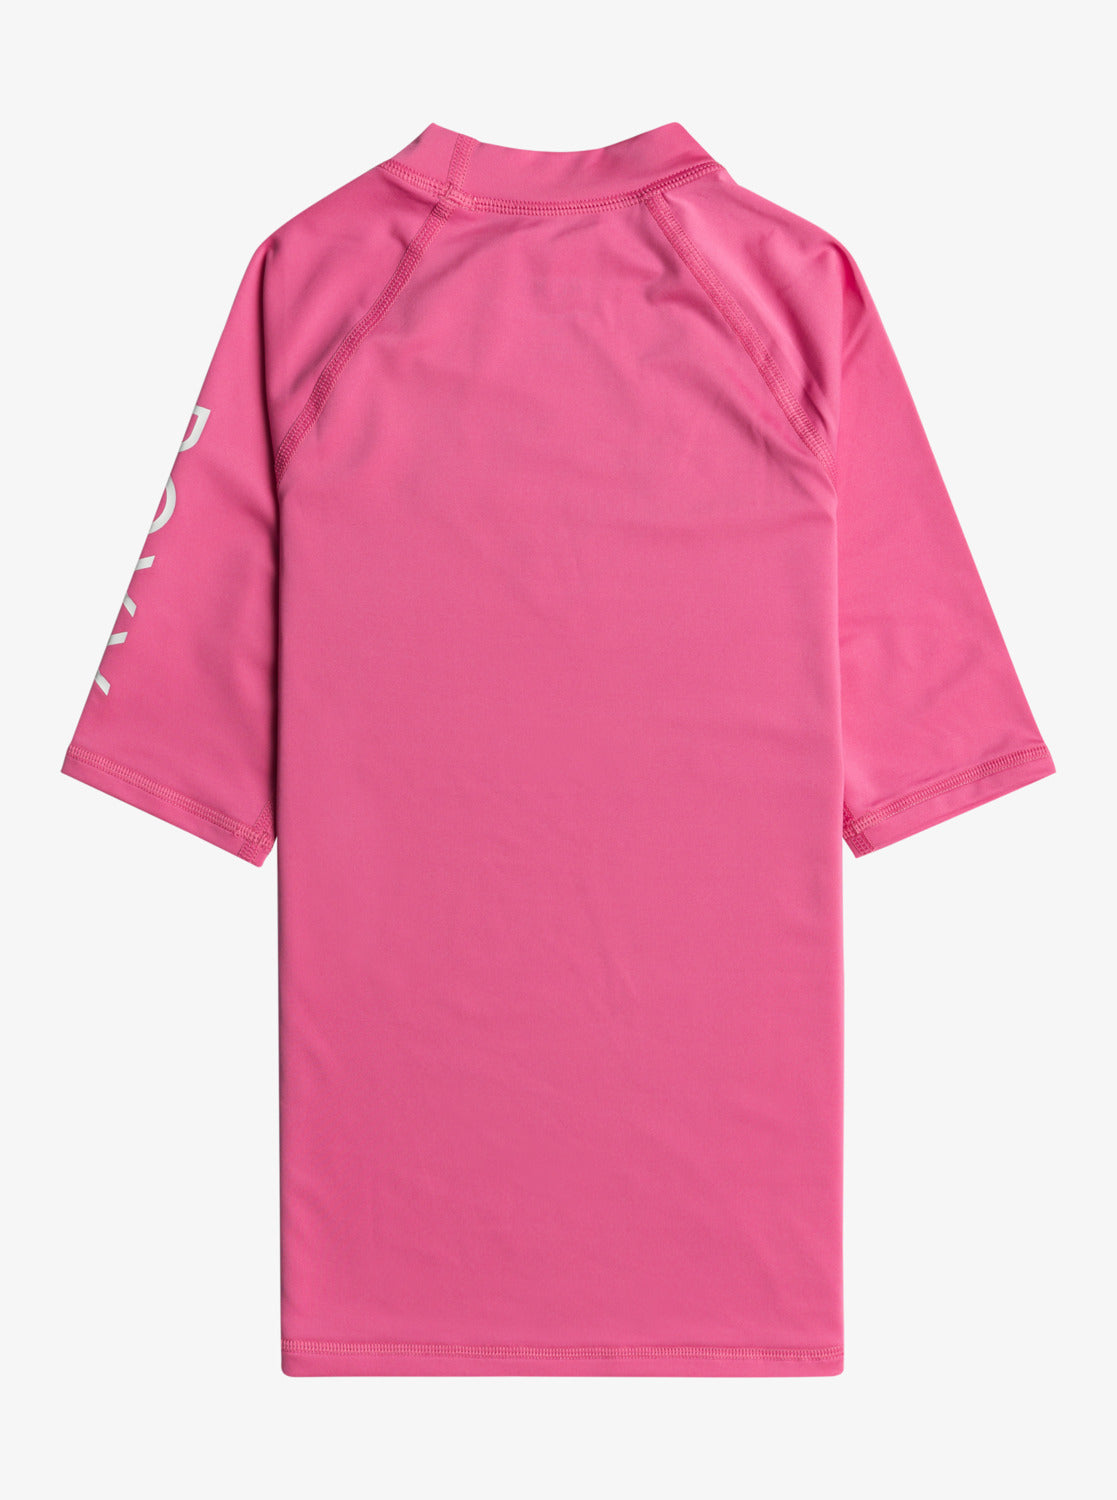 Roxy Whole Hearted Girls Short Sleeve UPF 50 Rash Vest in Shocking Pink